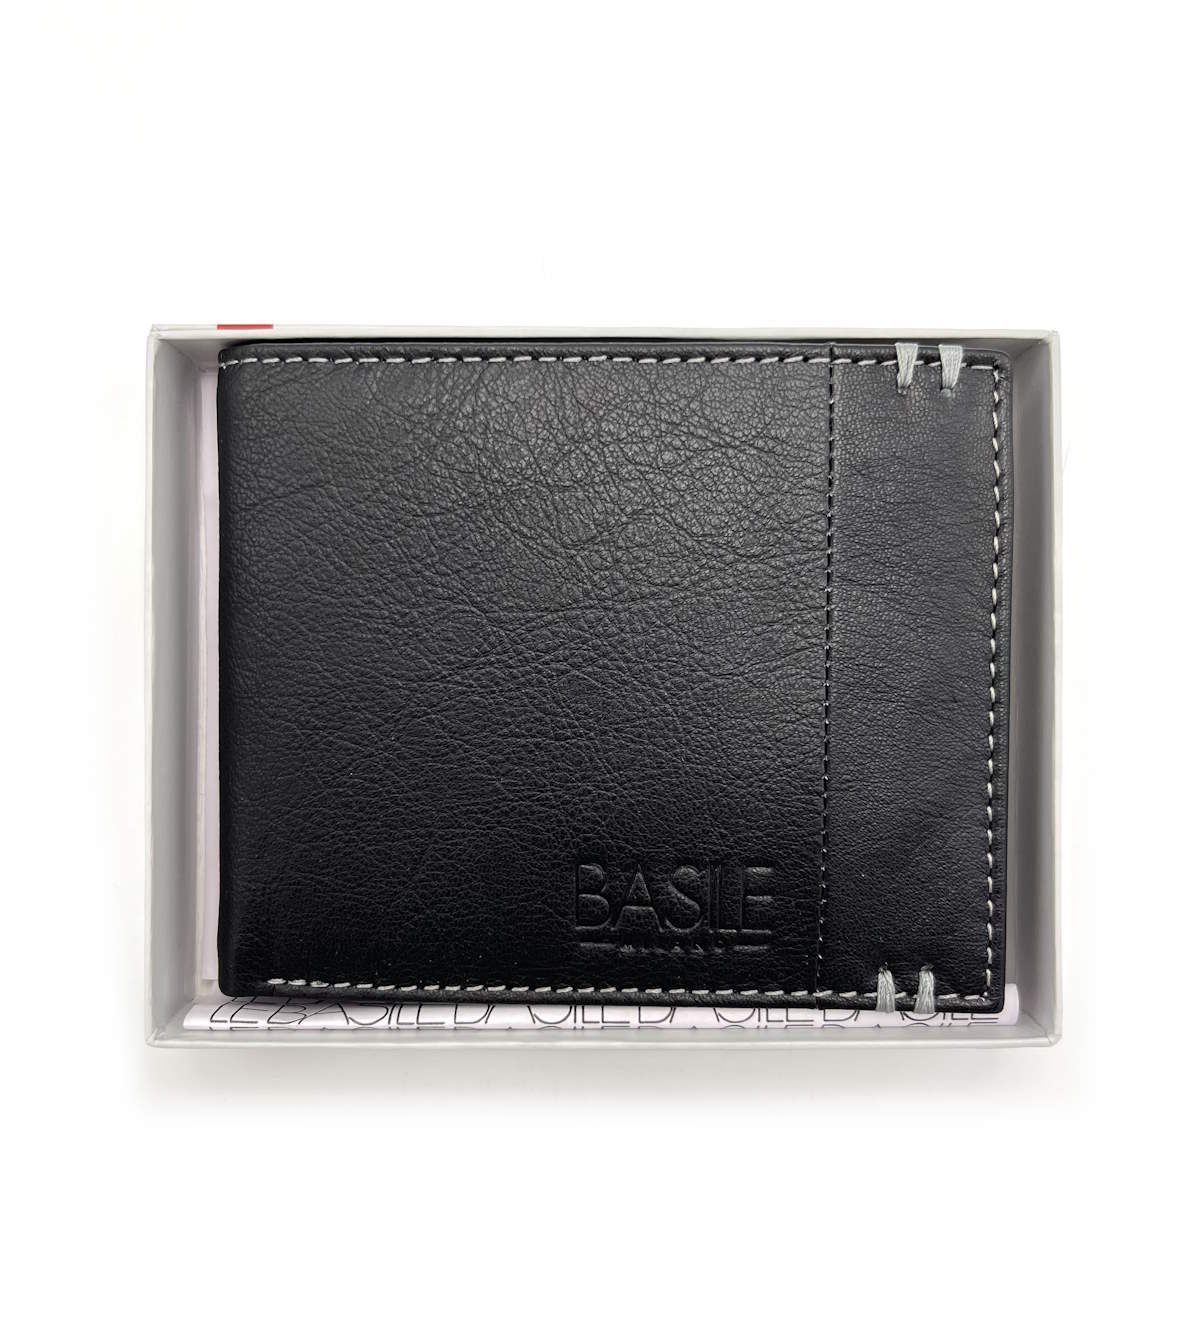 Genuine leather Wallet, Brand Basile, art. BA1911-2